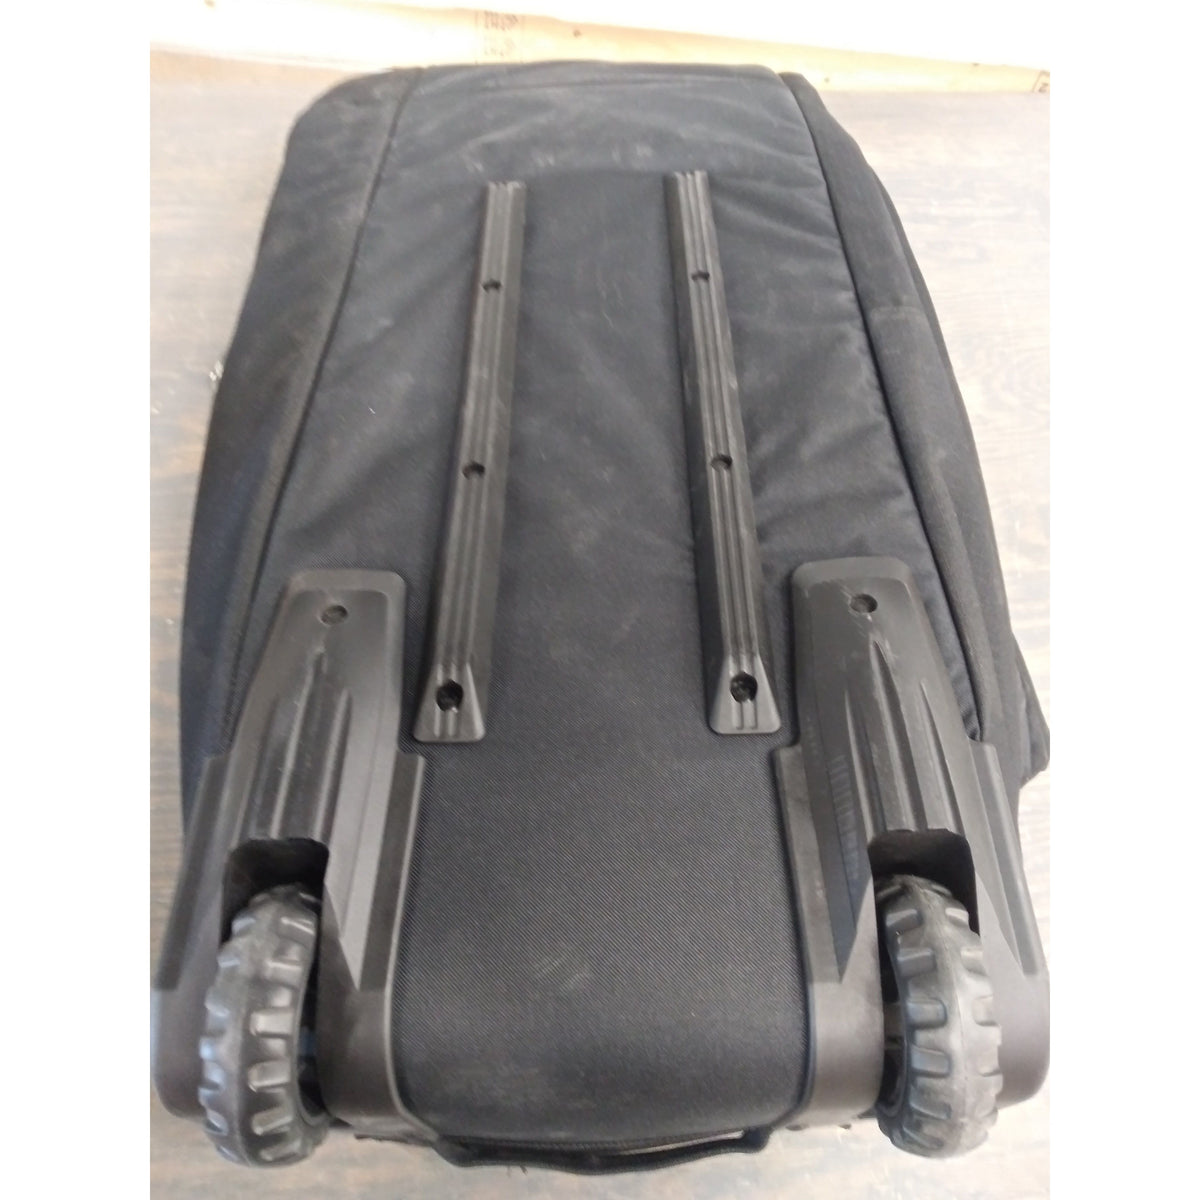 Dakine Boundary Ski Roller Bag-Black-200 cm - Used - Acceptable